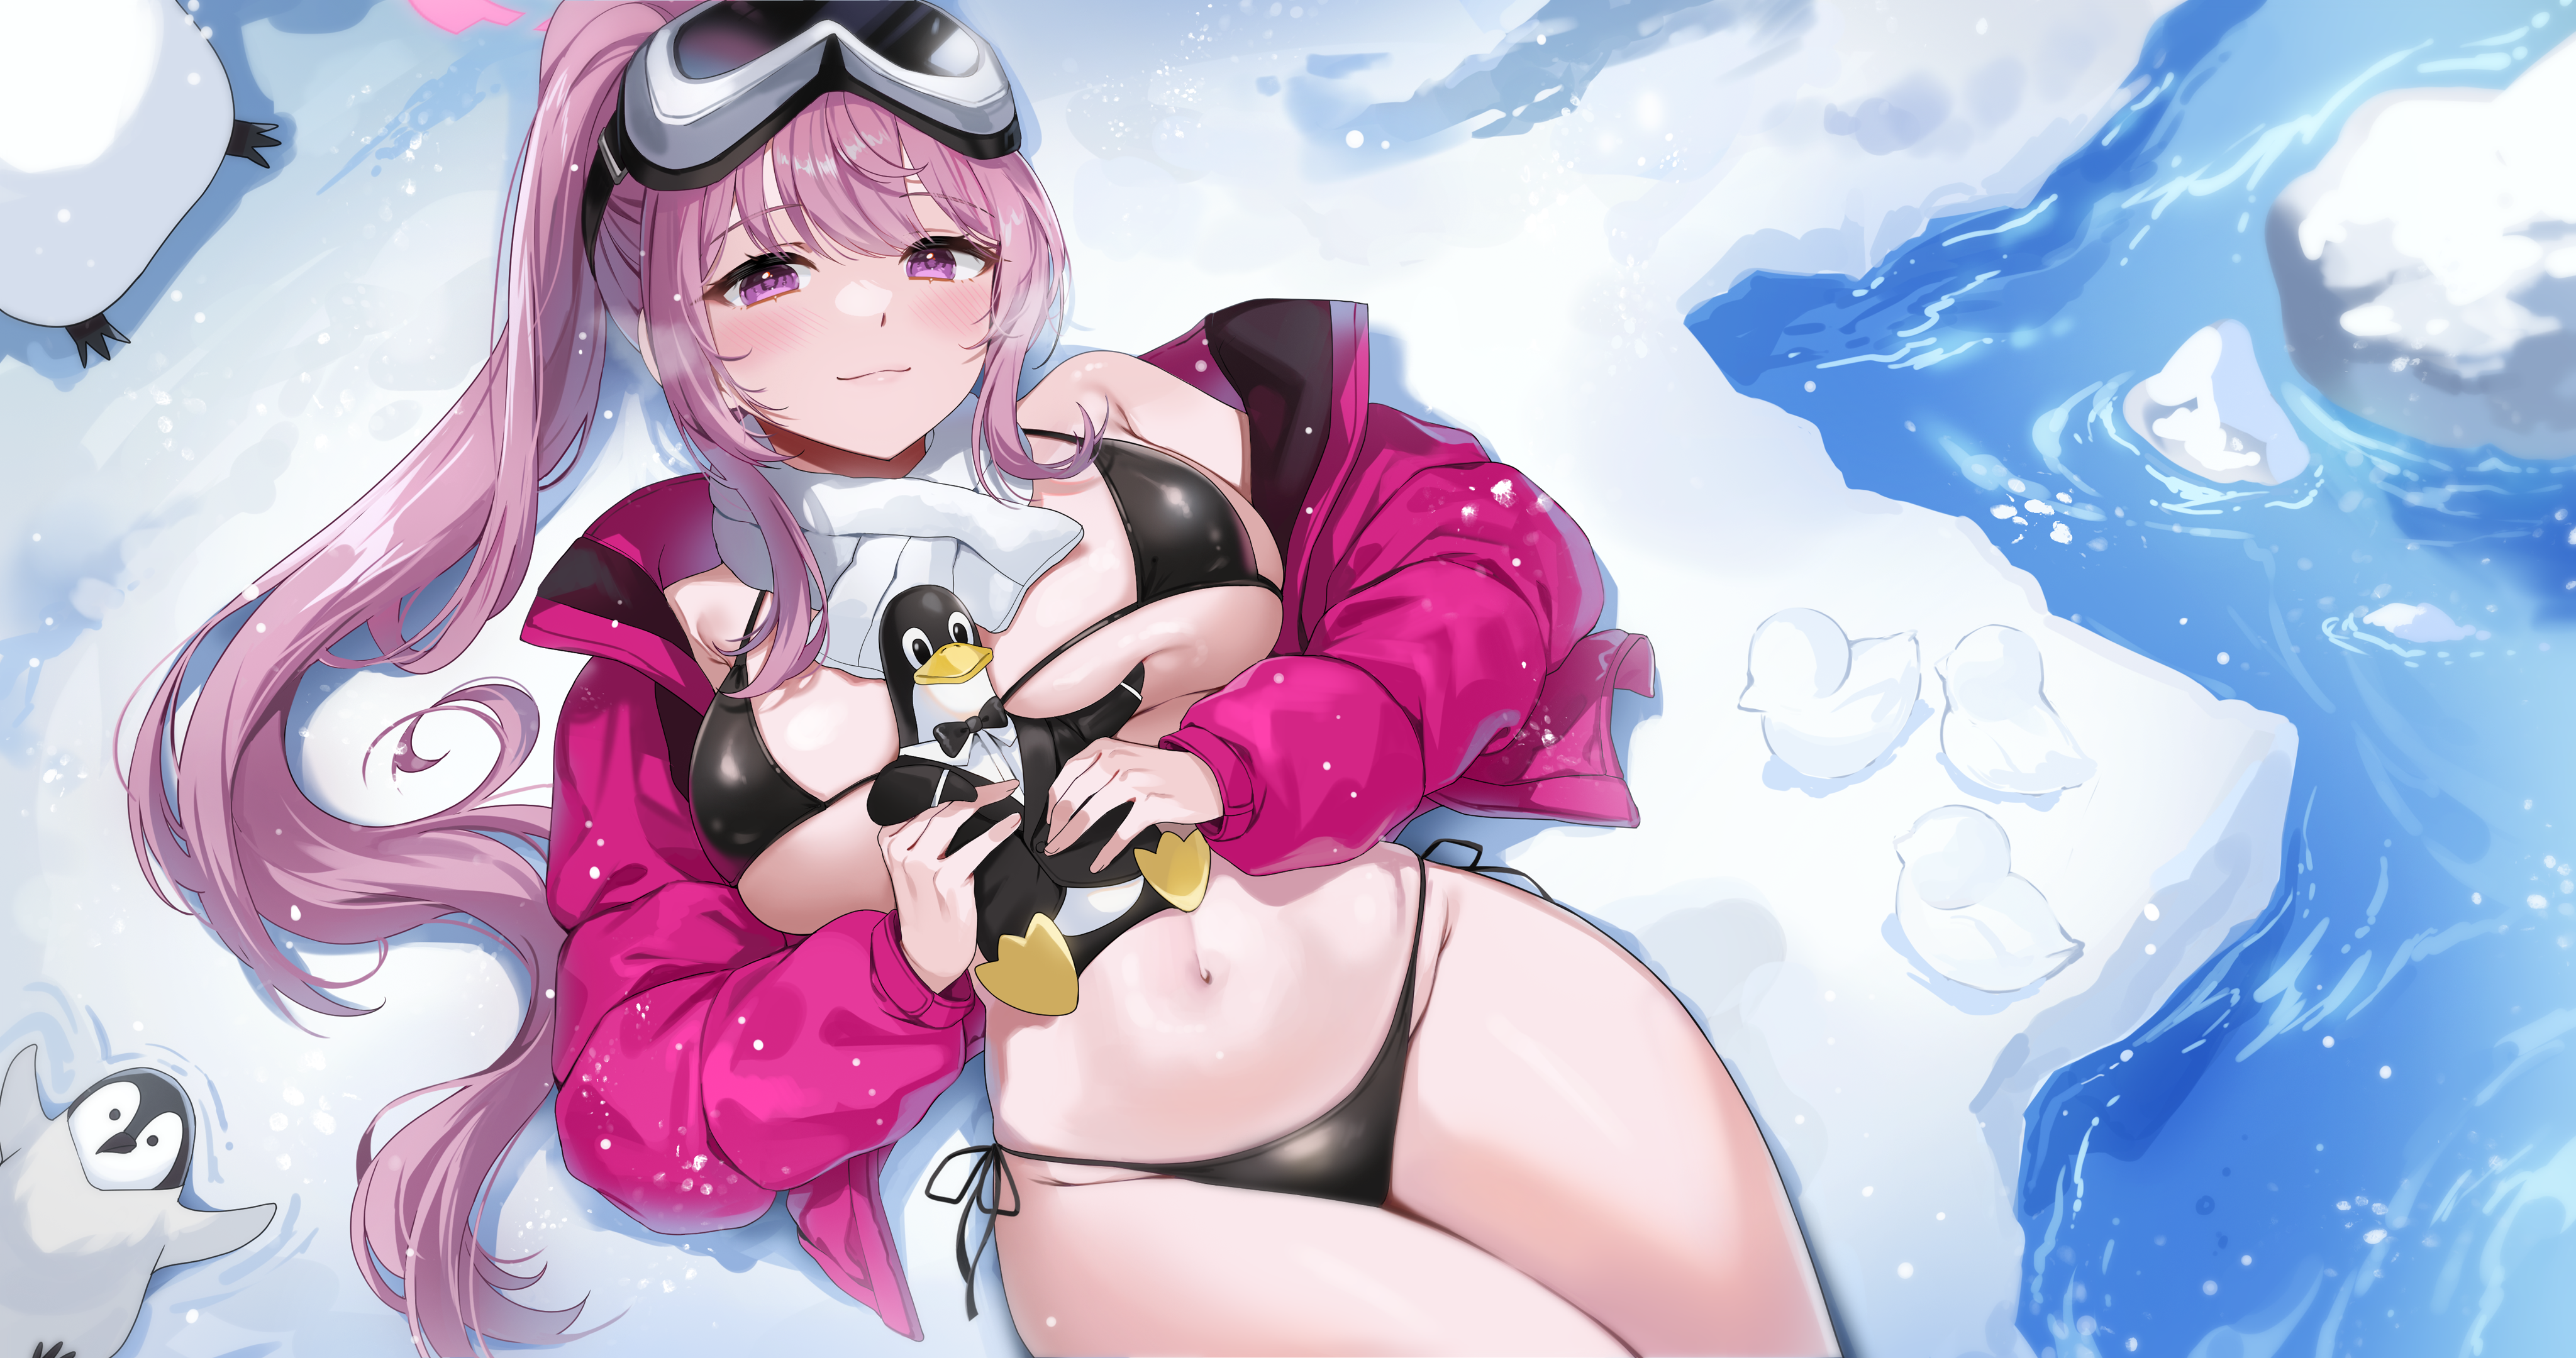 Anime 4096x2160 Izumimoto Eimi Blue Archive anime Pixiv anime games anime girls big boobs bikini snow blushing smiling Tux penguins Ski Goggles scarf overcoats